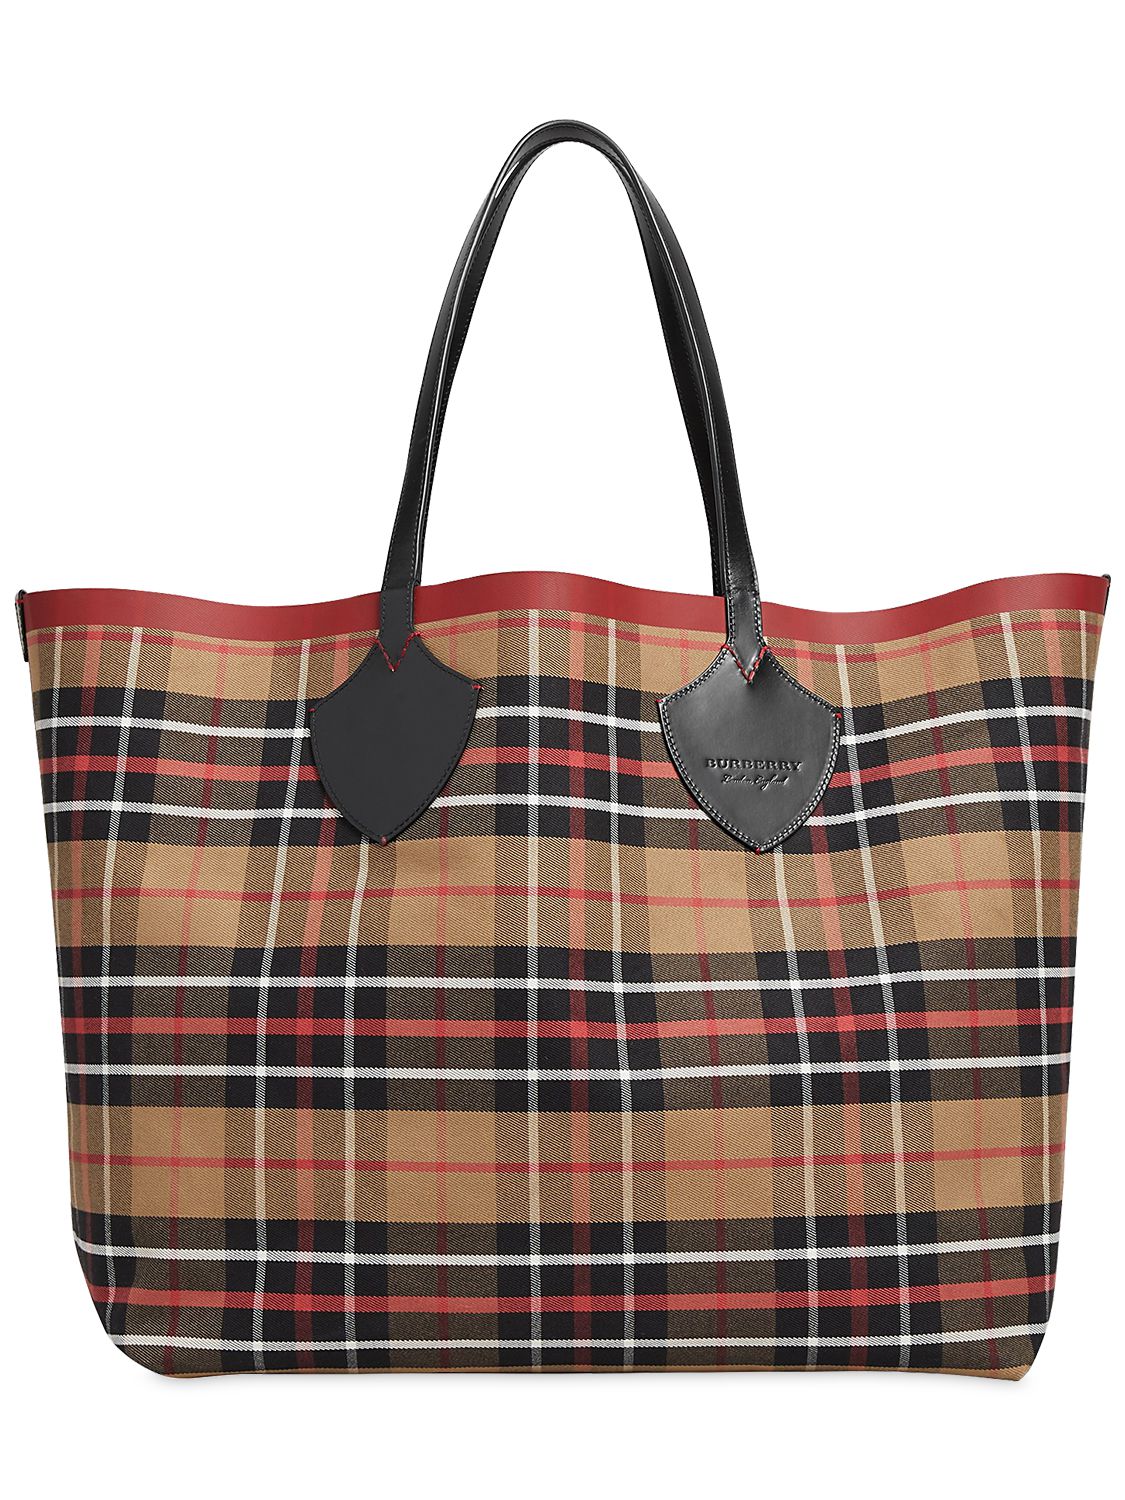 Burberry Reversible Check-print Tote Bag, Multi In Multicolor